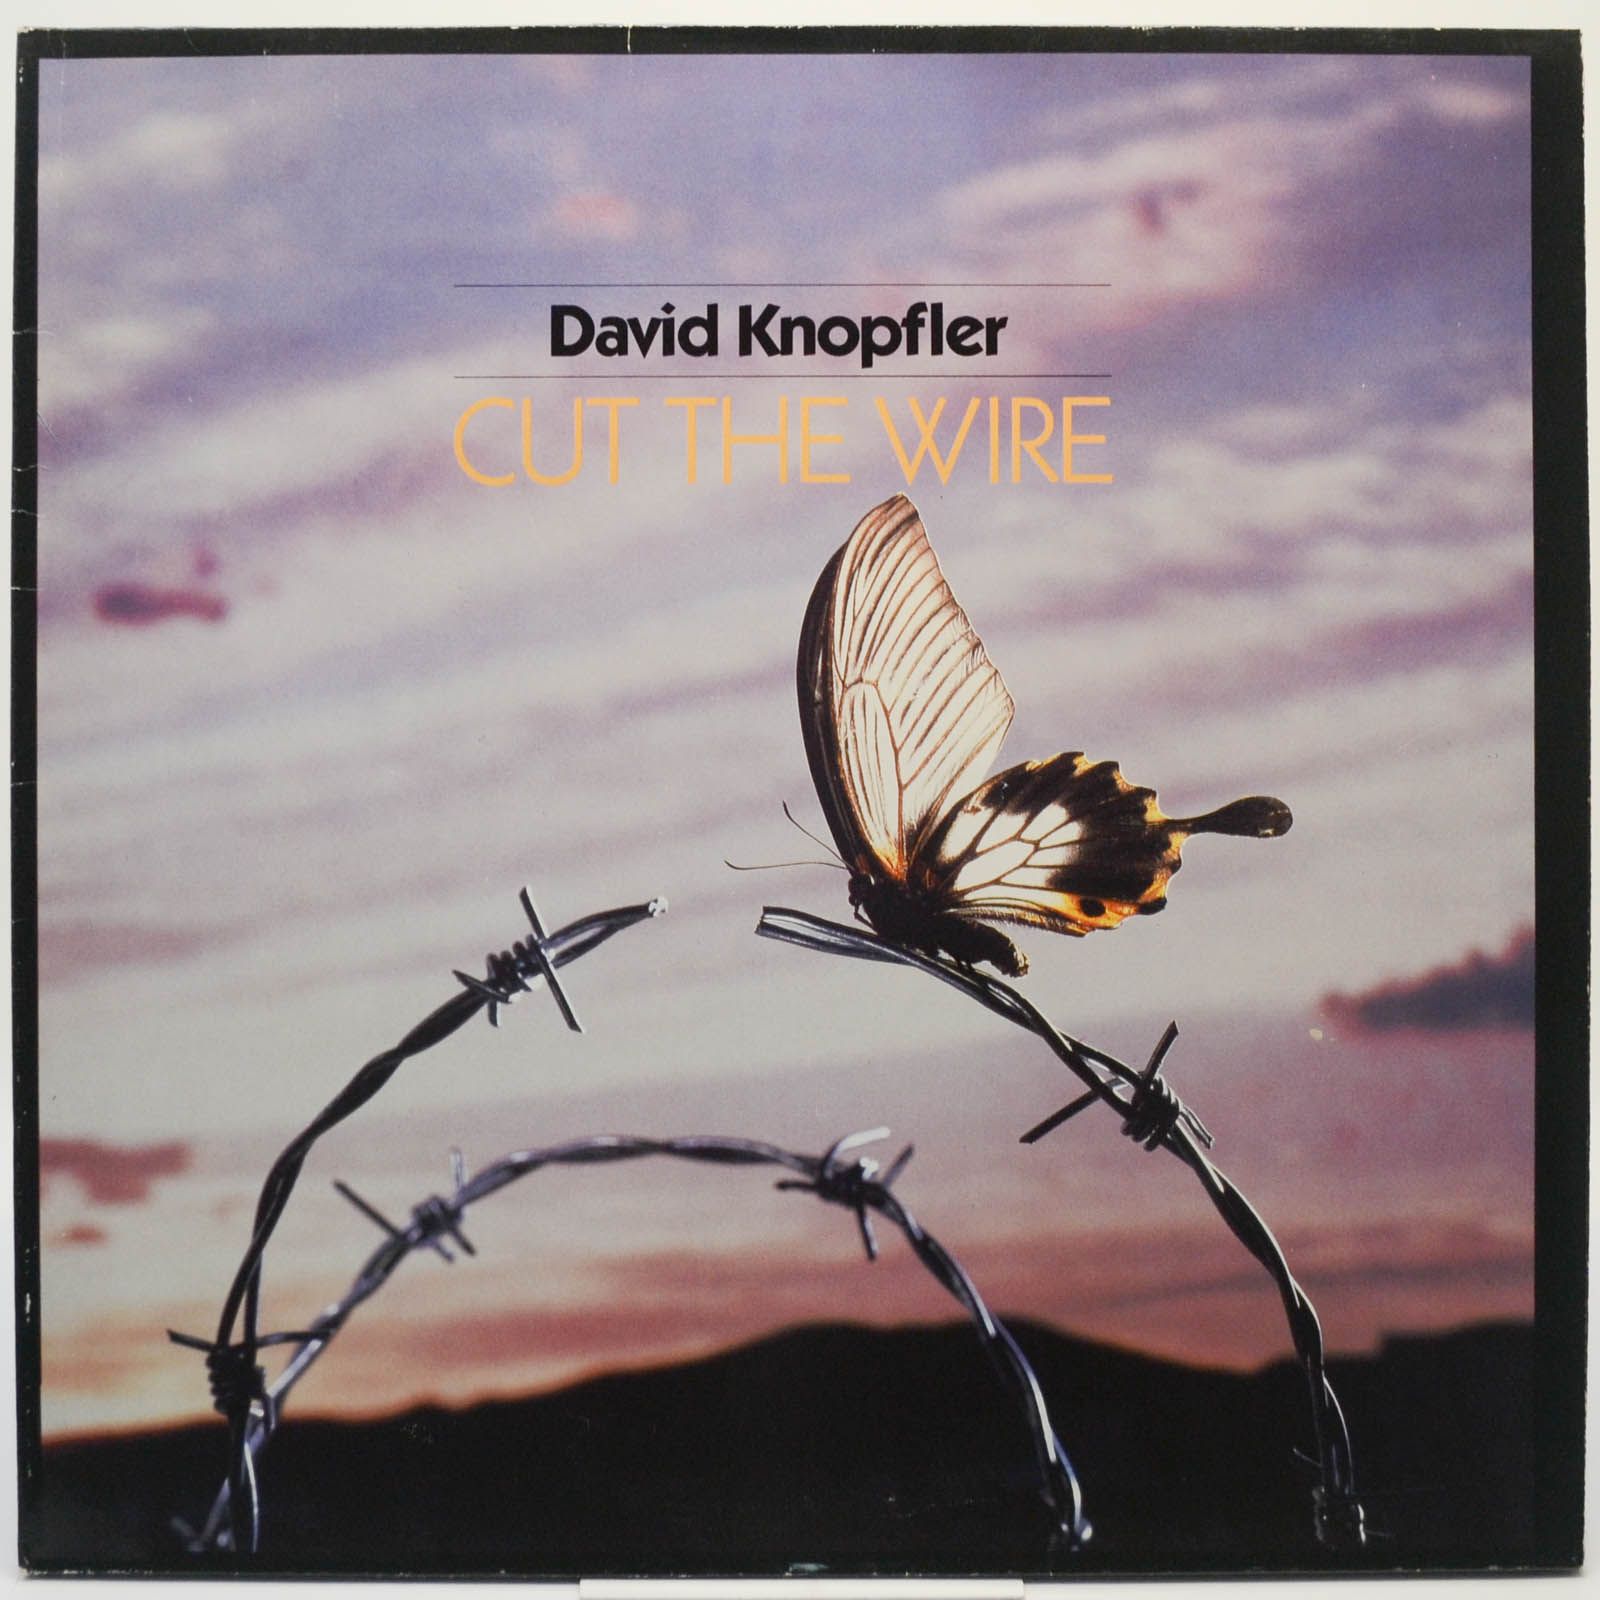 David Knopfler — Cut The Wire, 1987